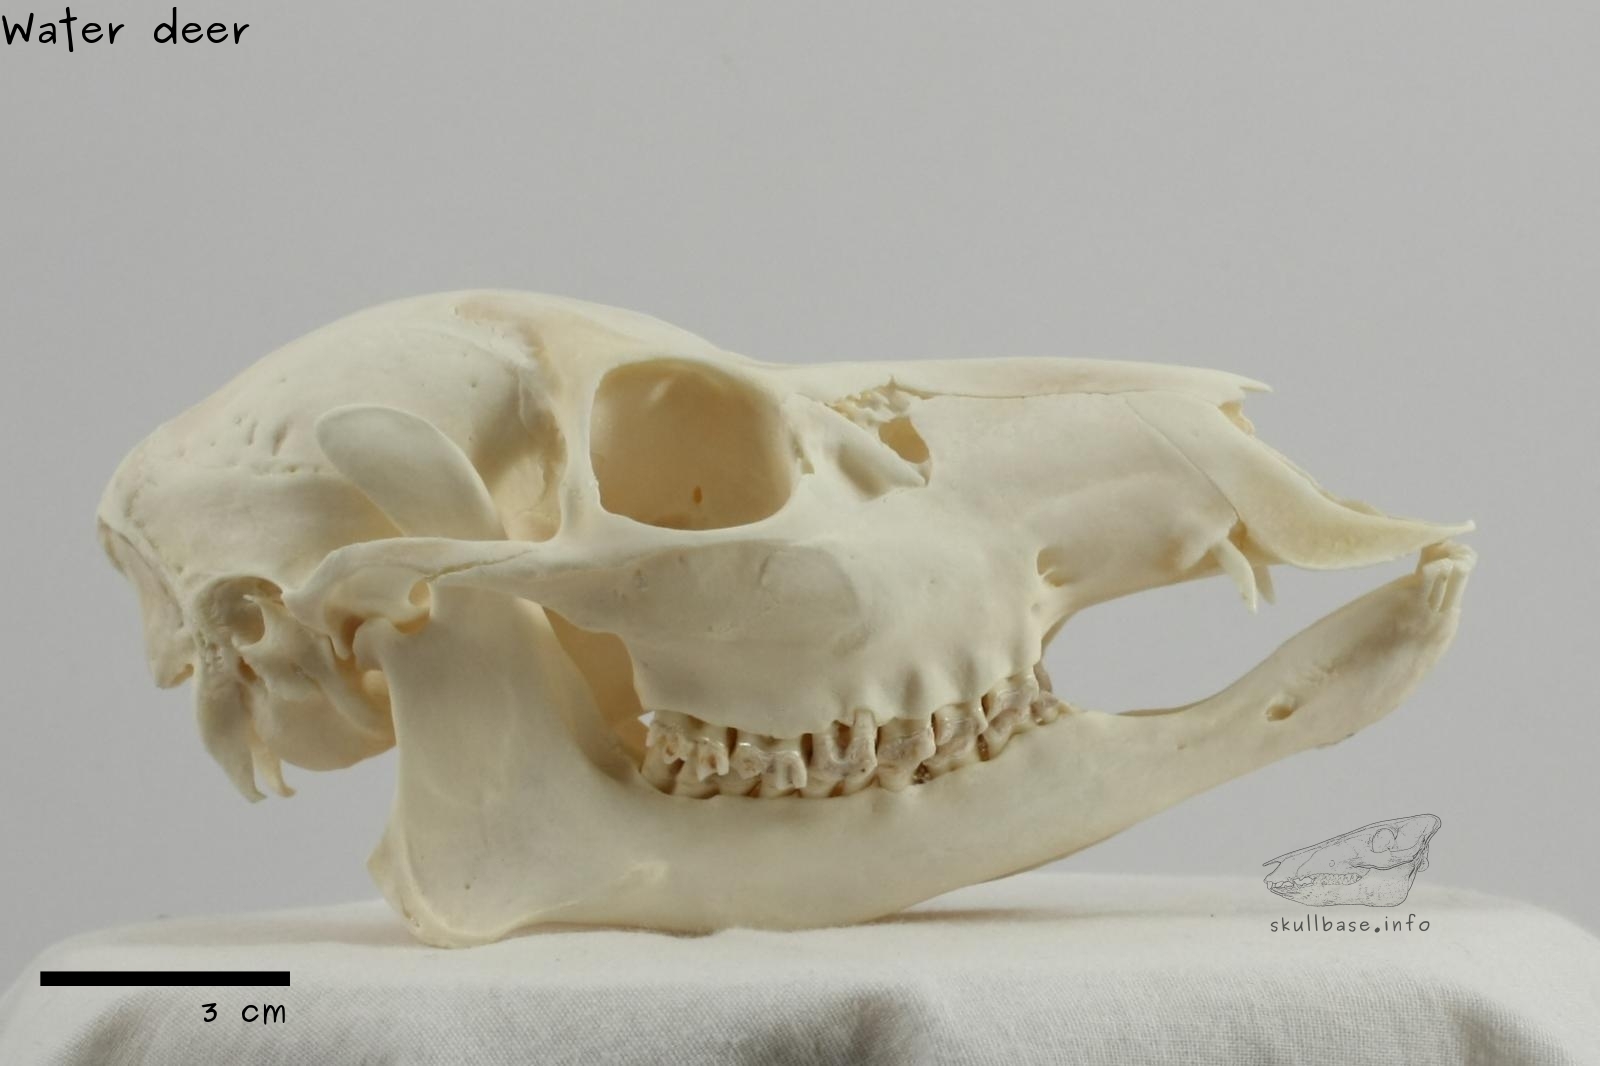 Water deer (Hydropotes inermis) skull lateral view